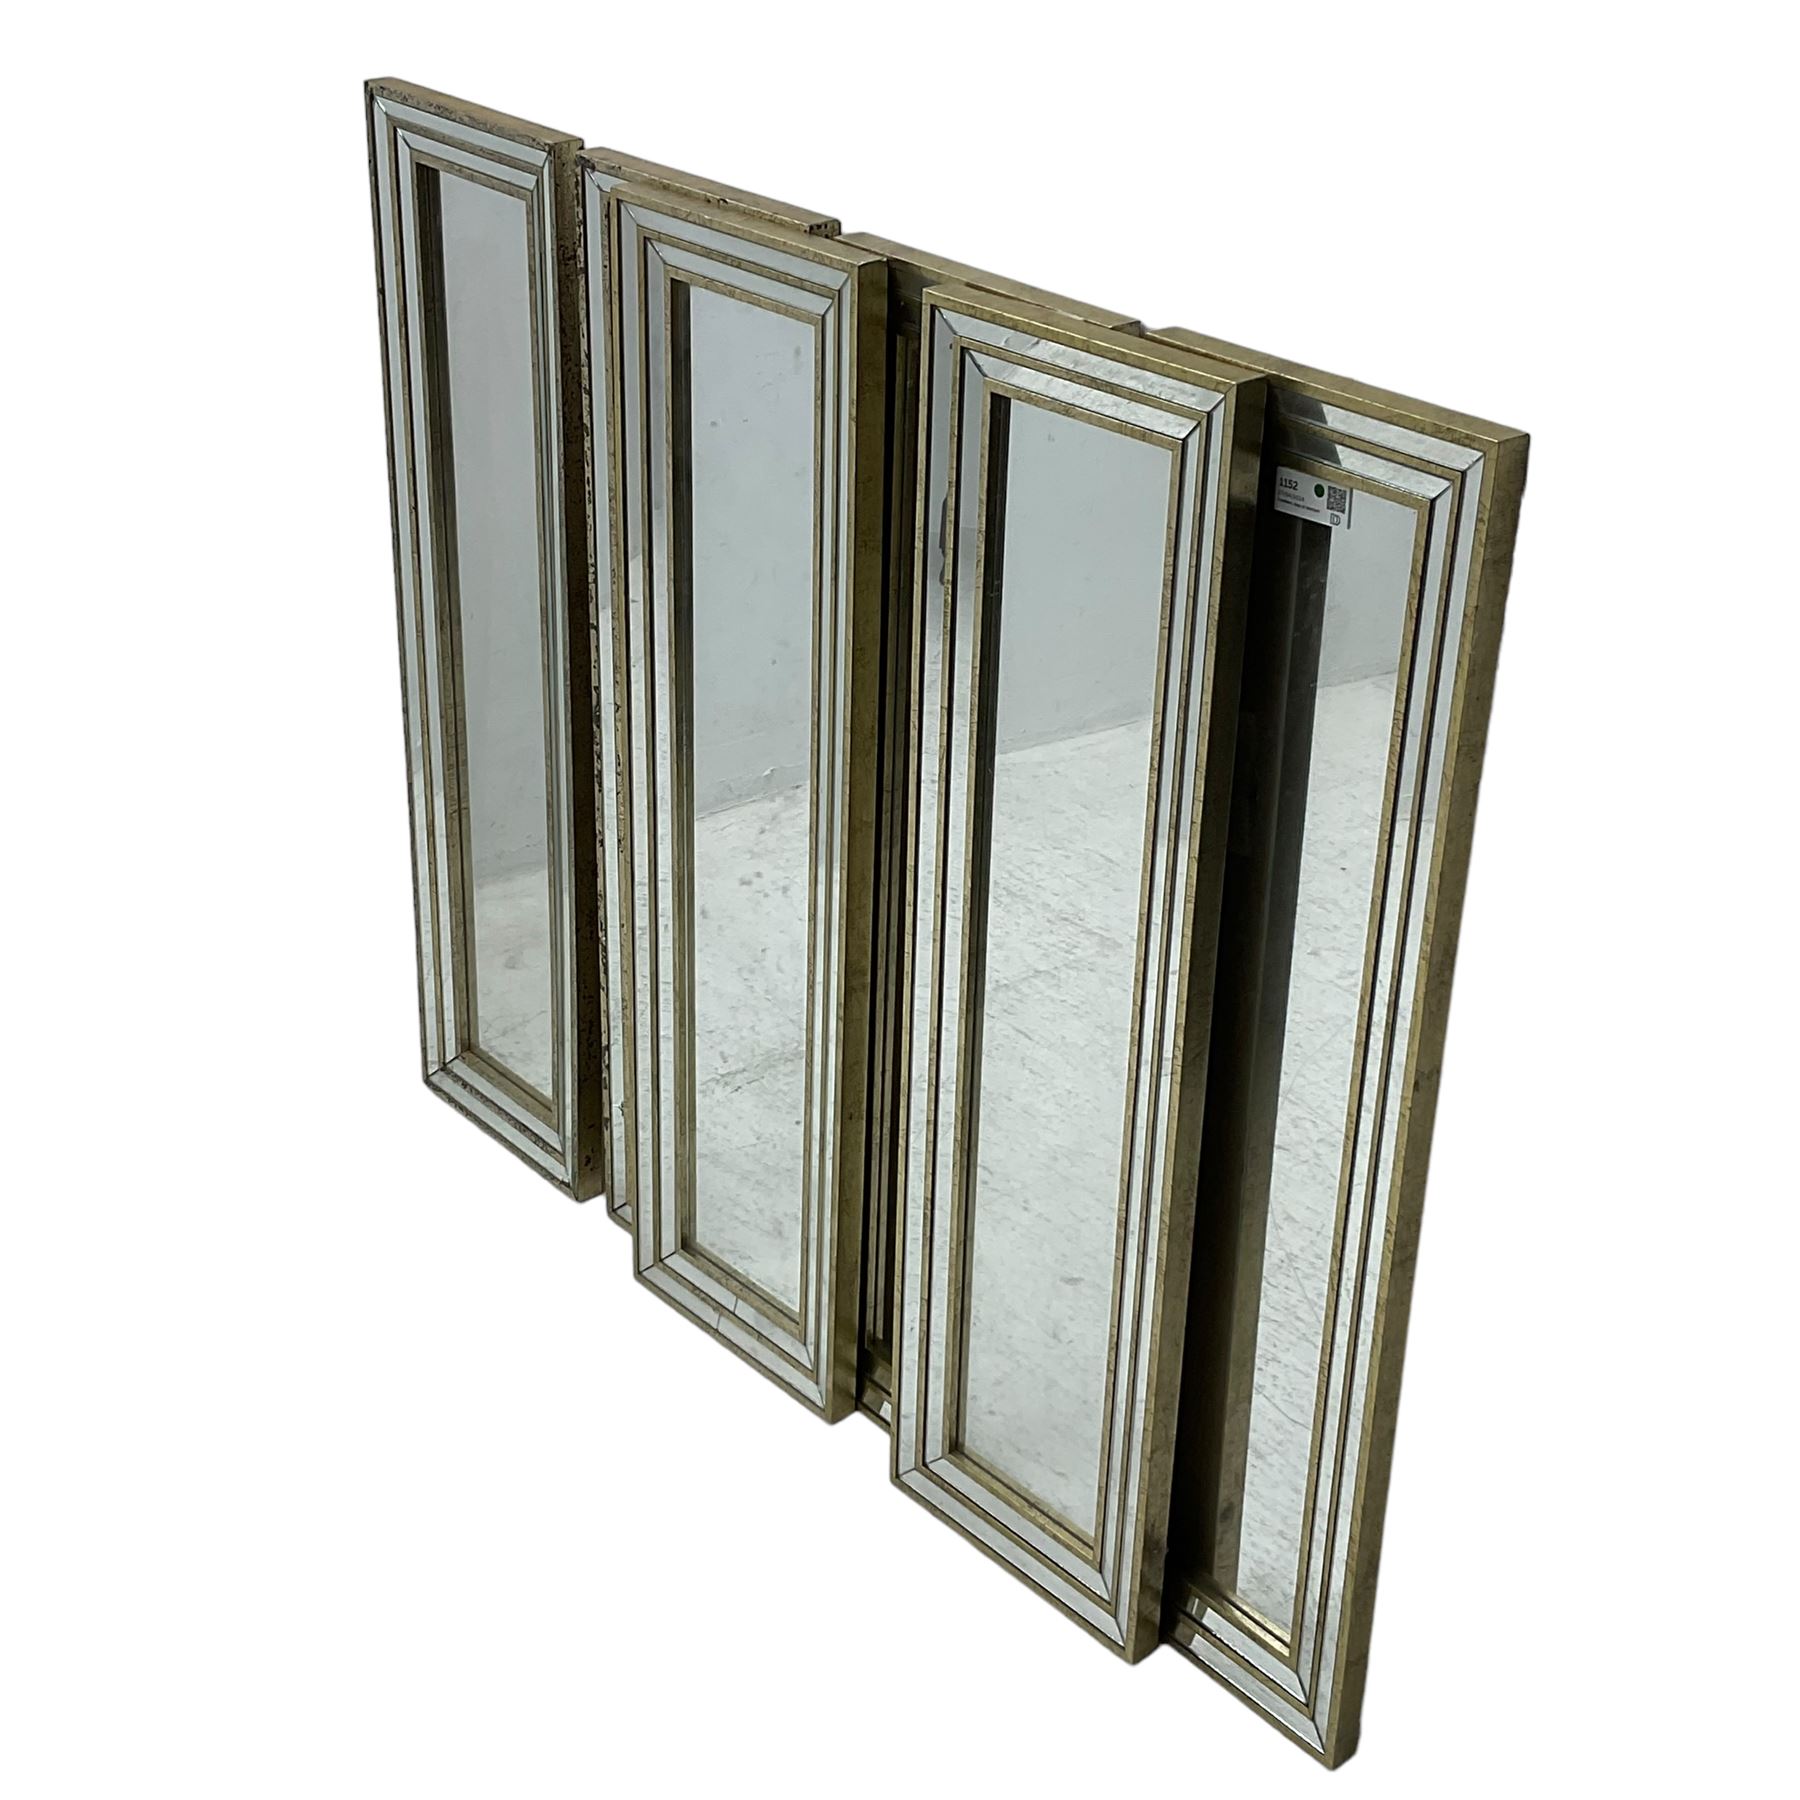 Six narrow rectangular wall mirrors - Image 4 of 4